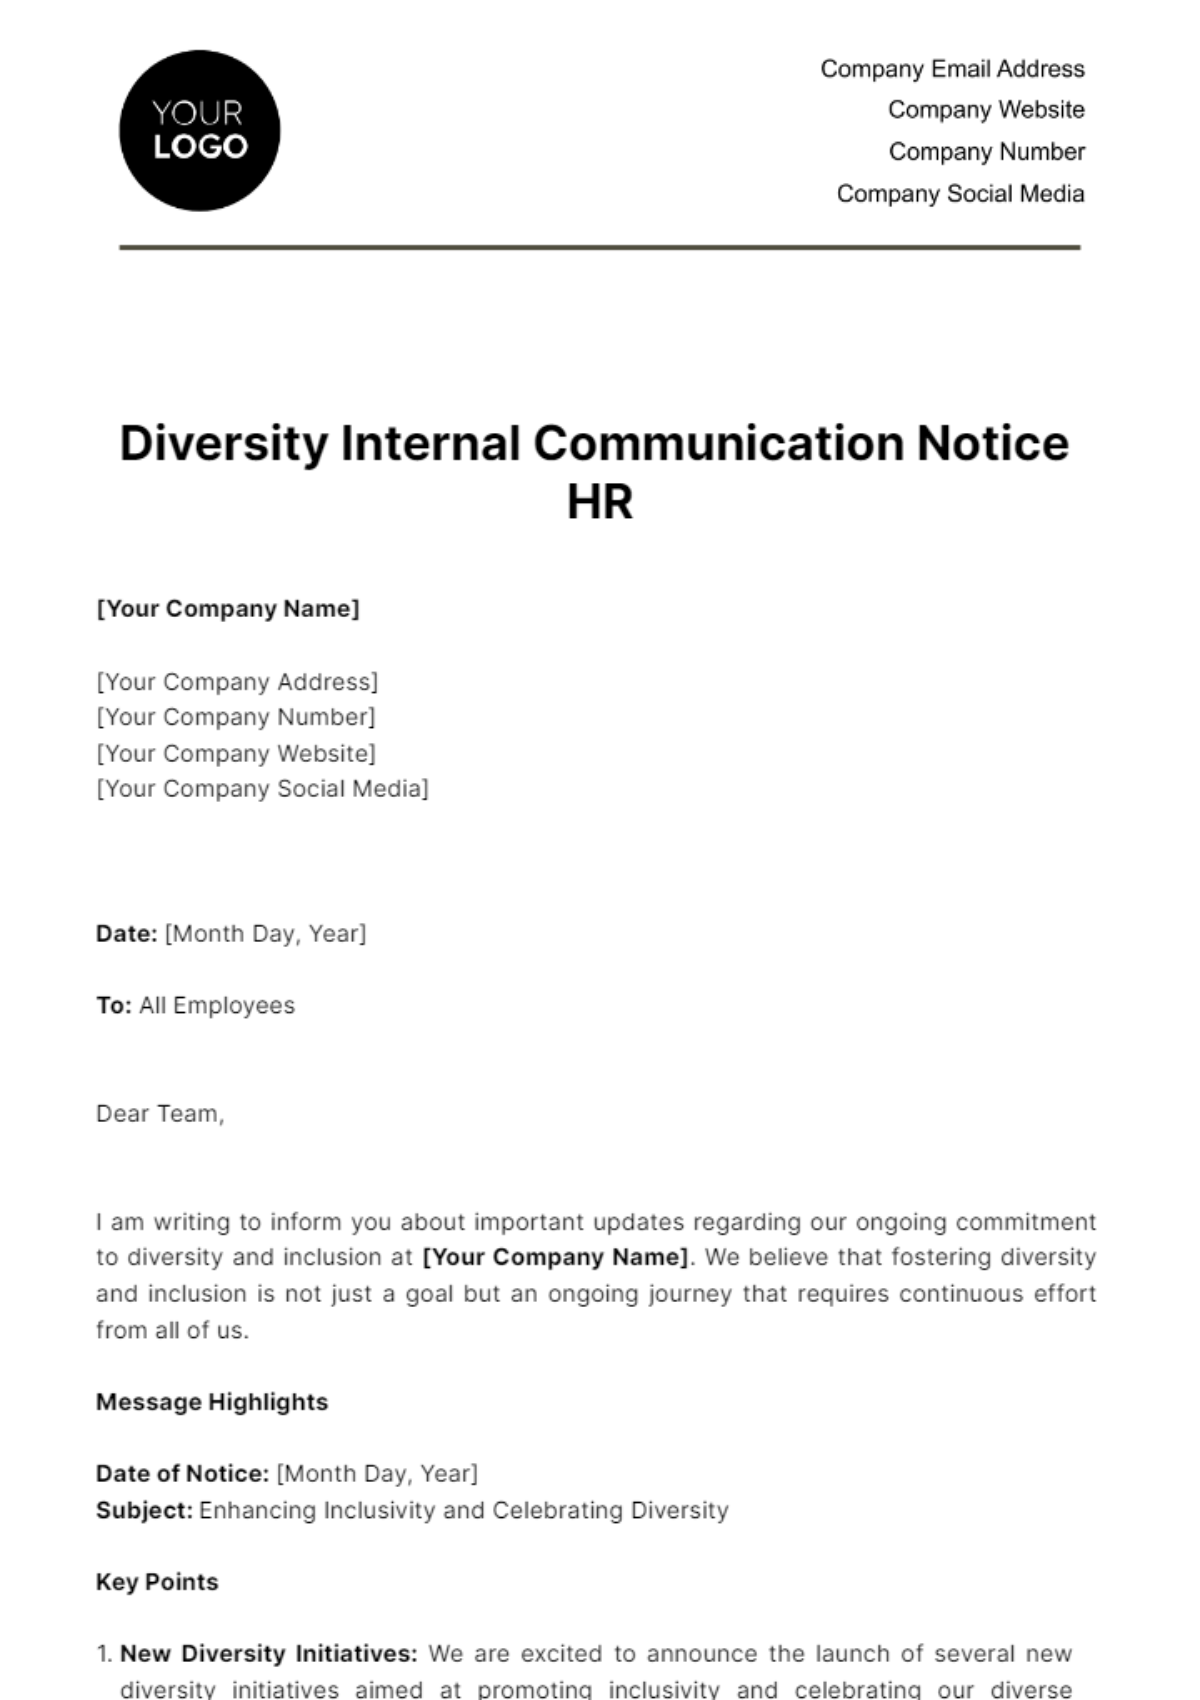 Free Diversity Internal Communication Notice HR Template